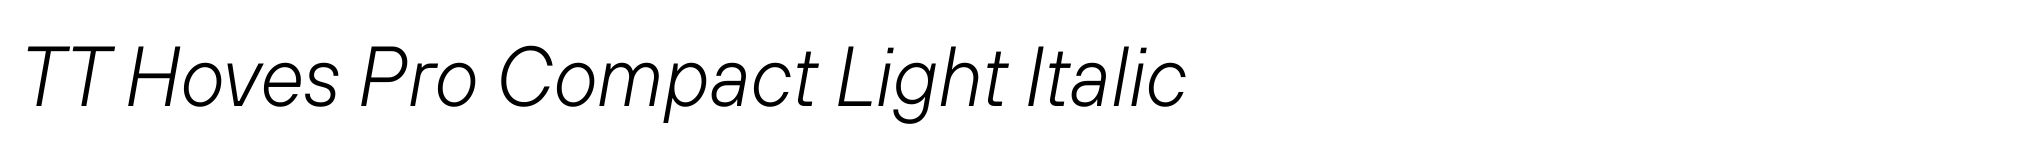 TT Hoves Pro Compact Light Italic image